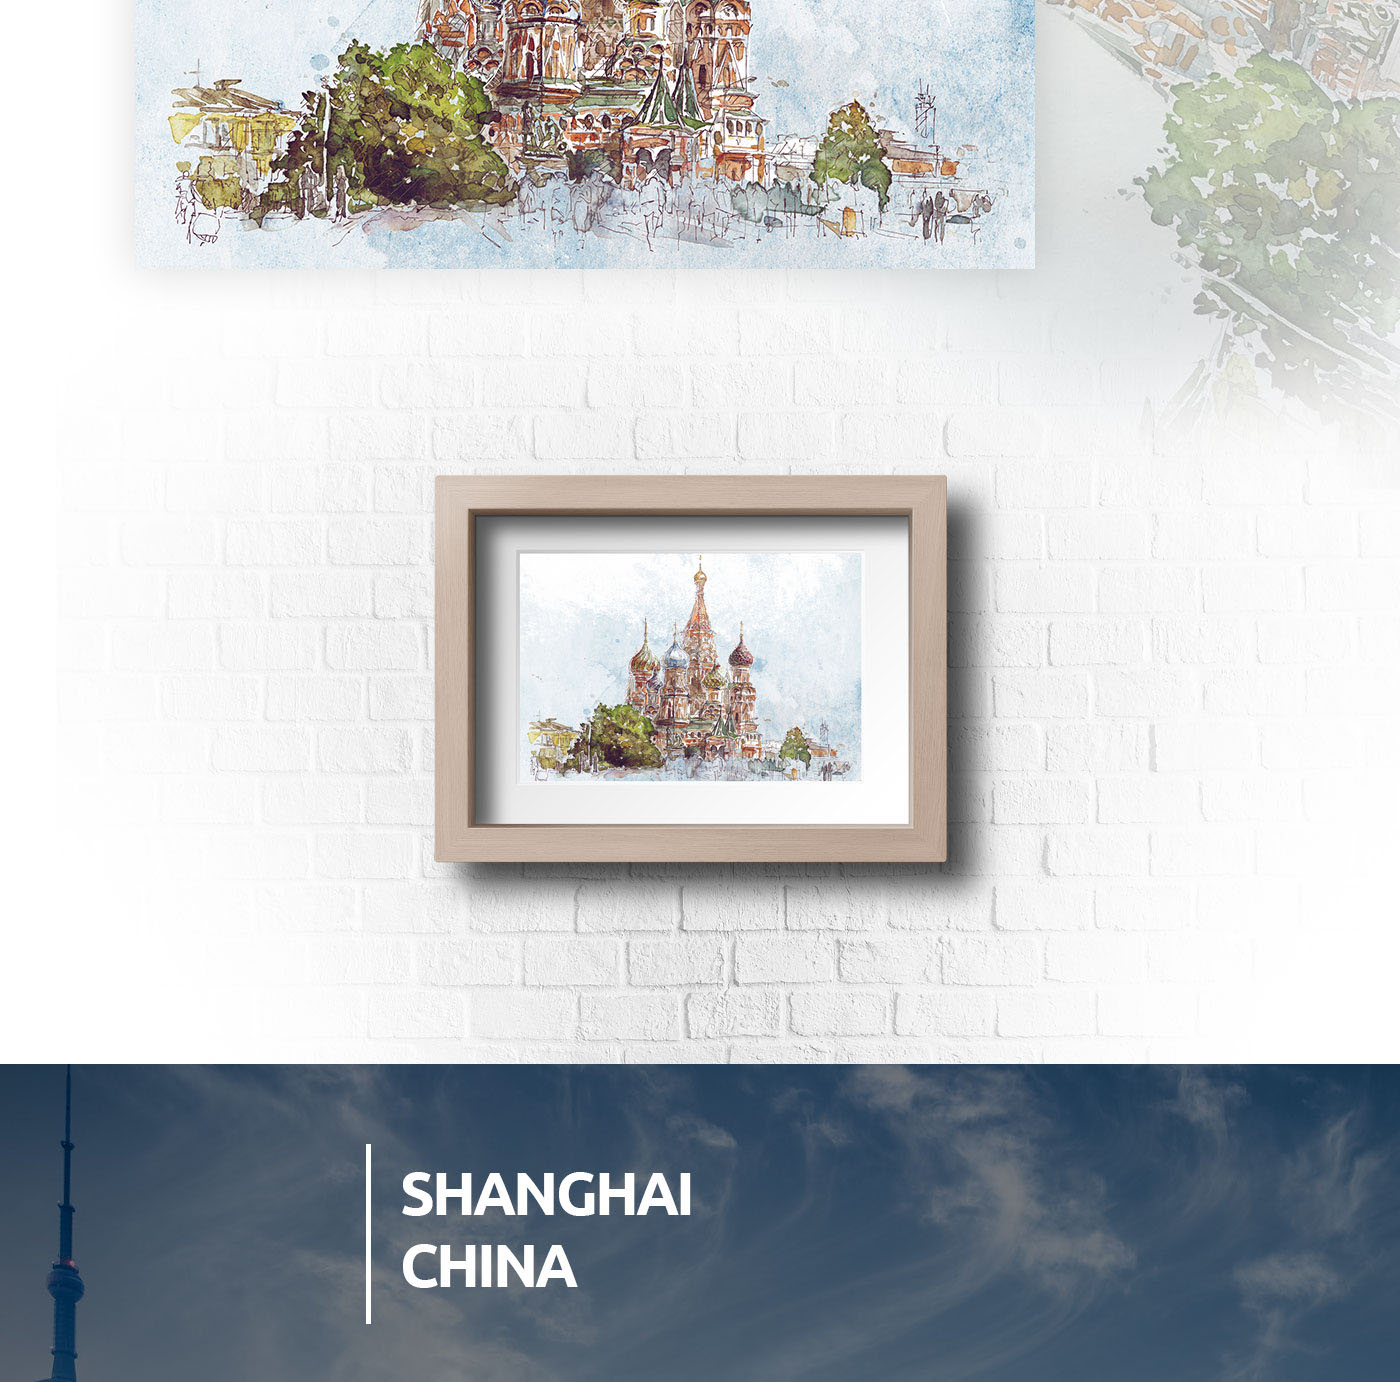 watercolor photoshop sydney New York singapore Moscow shanghai London vacation journey